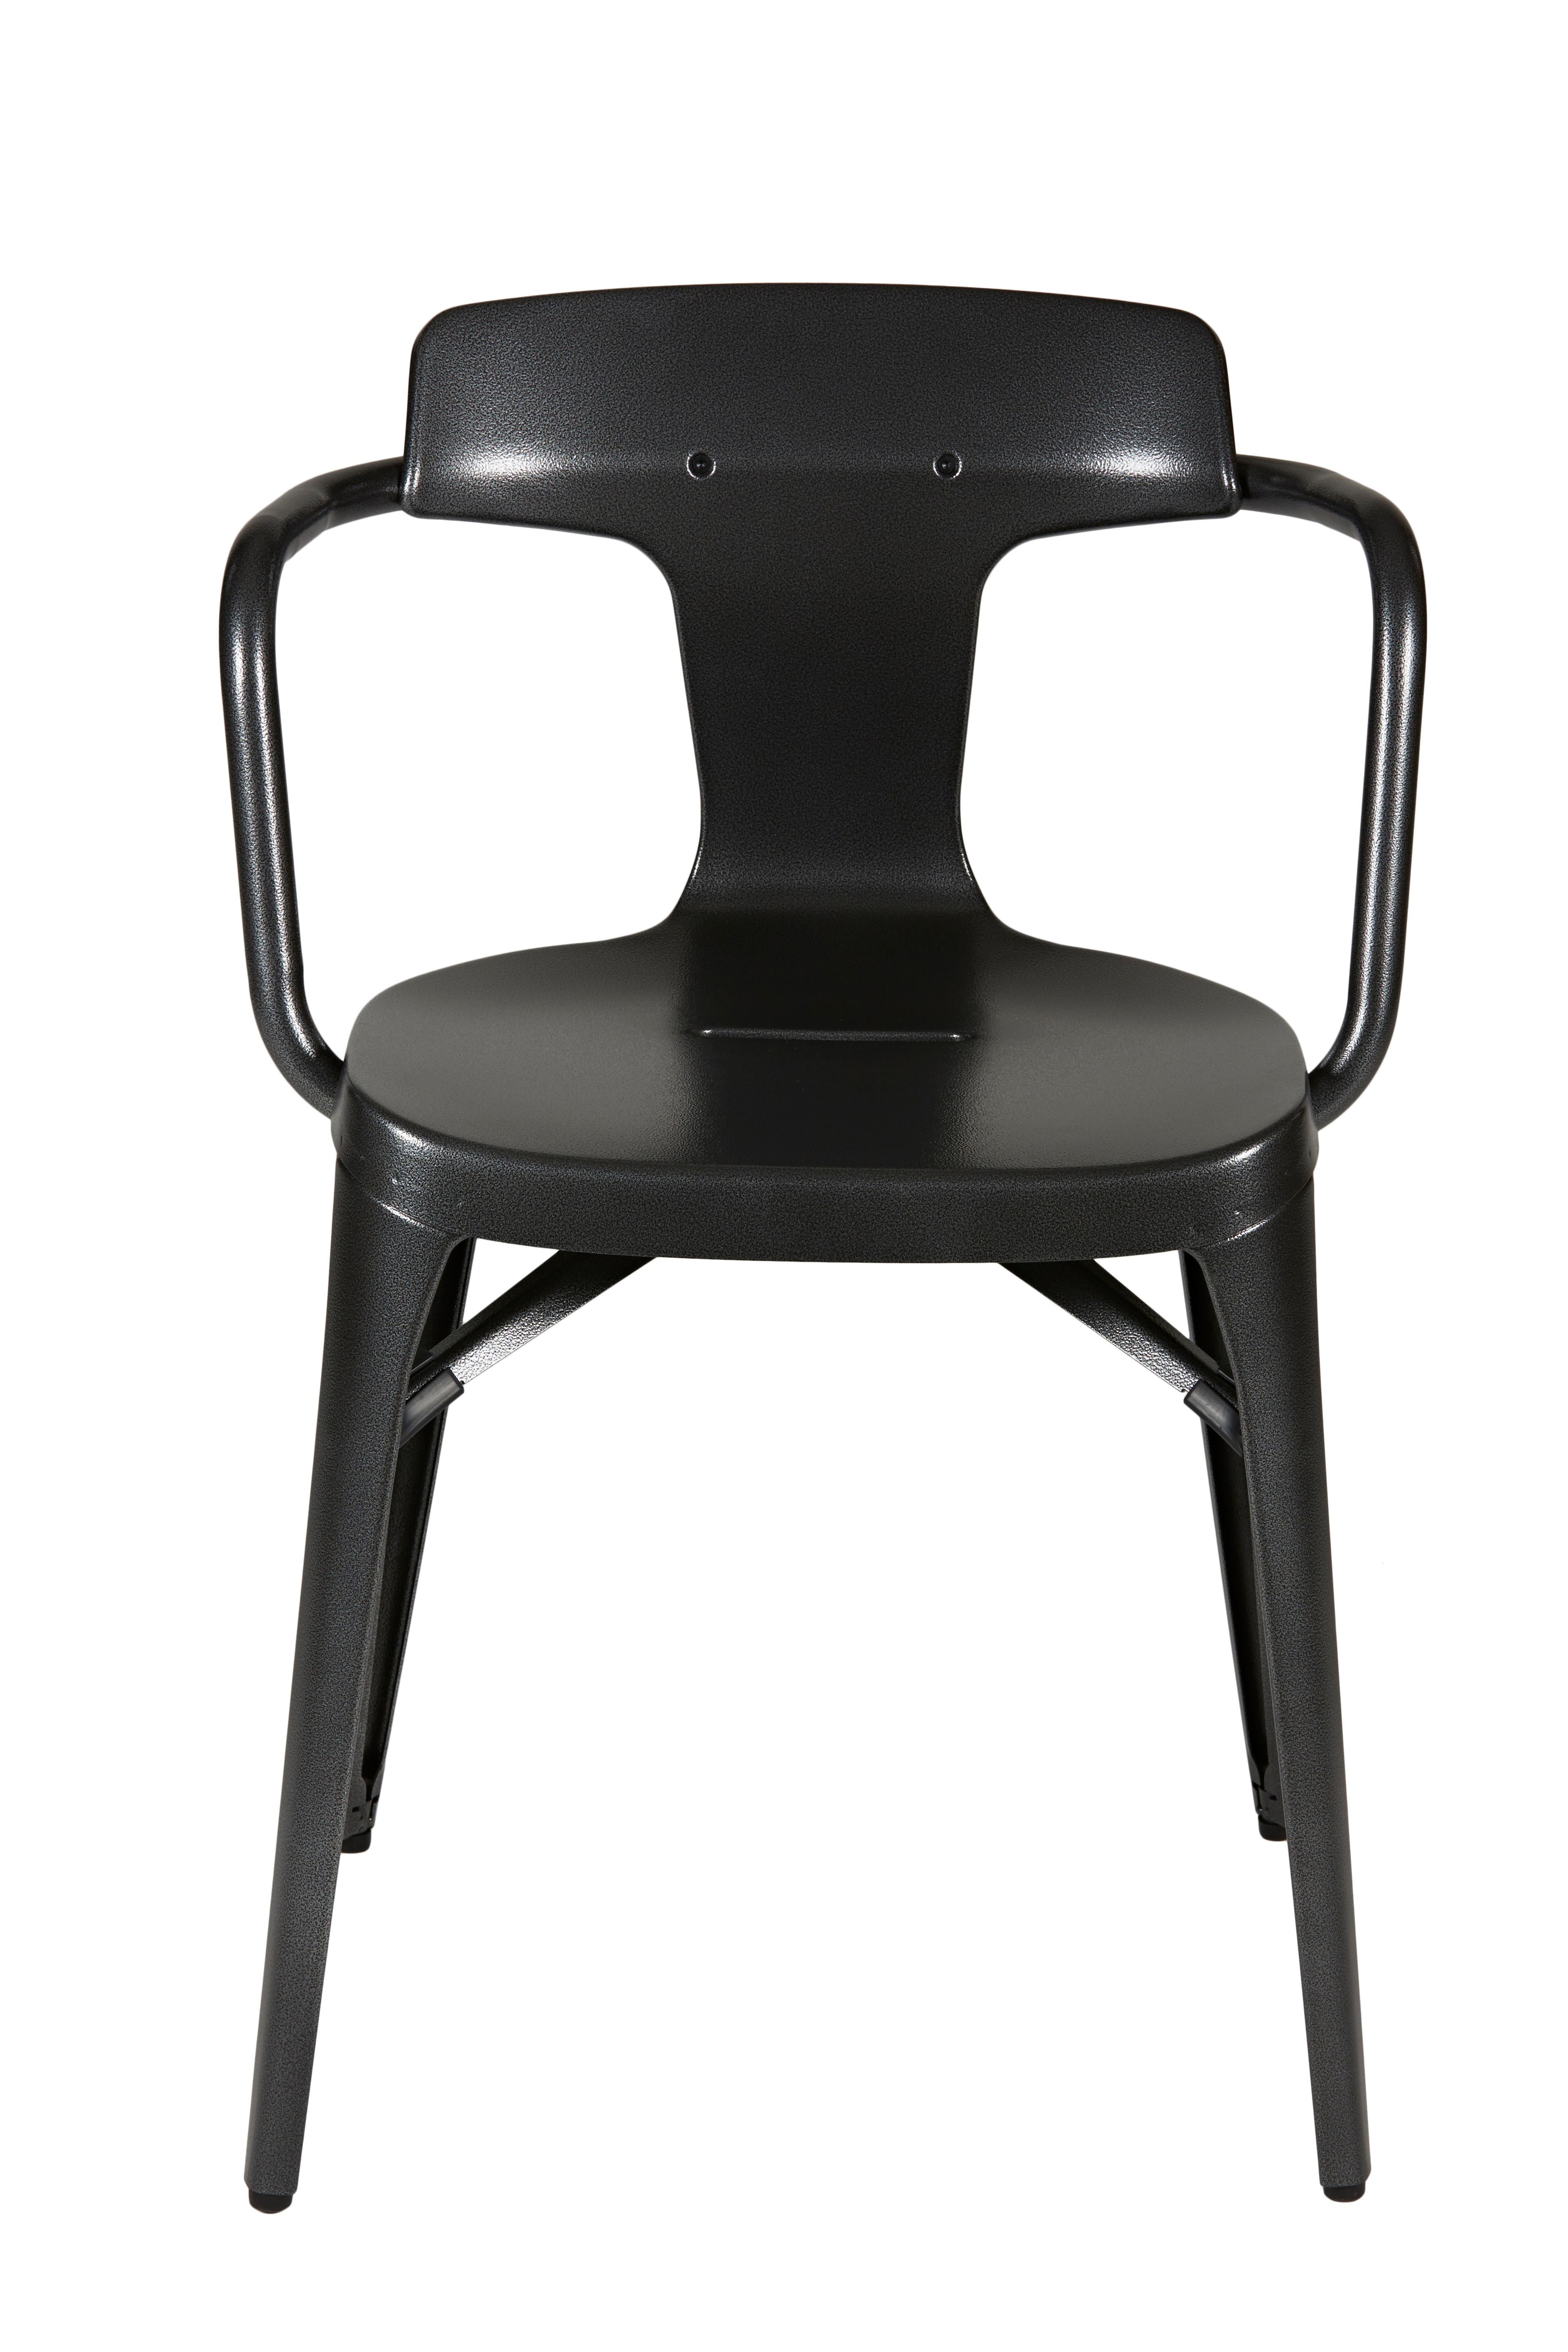 Im Angebot: T14 Chair in Pop Colors by Patrick Norguet and Tolix, Gray (Gris Martelé)